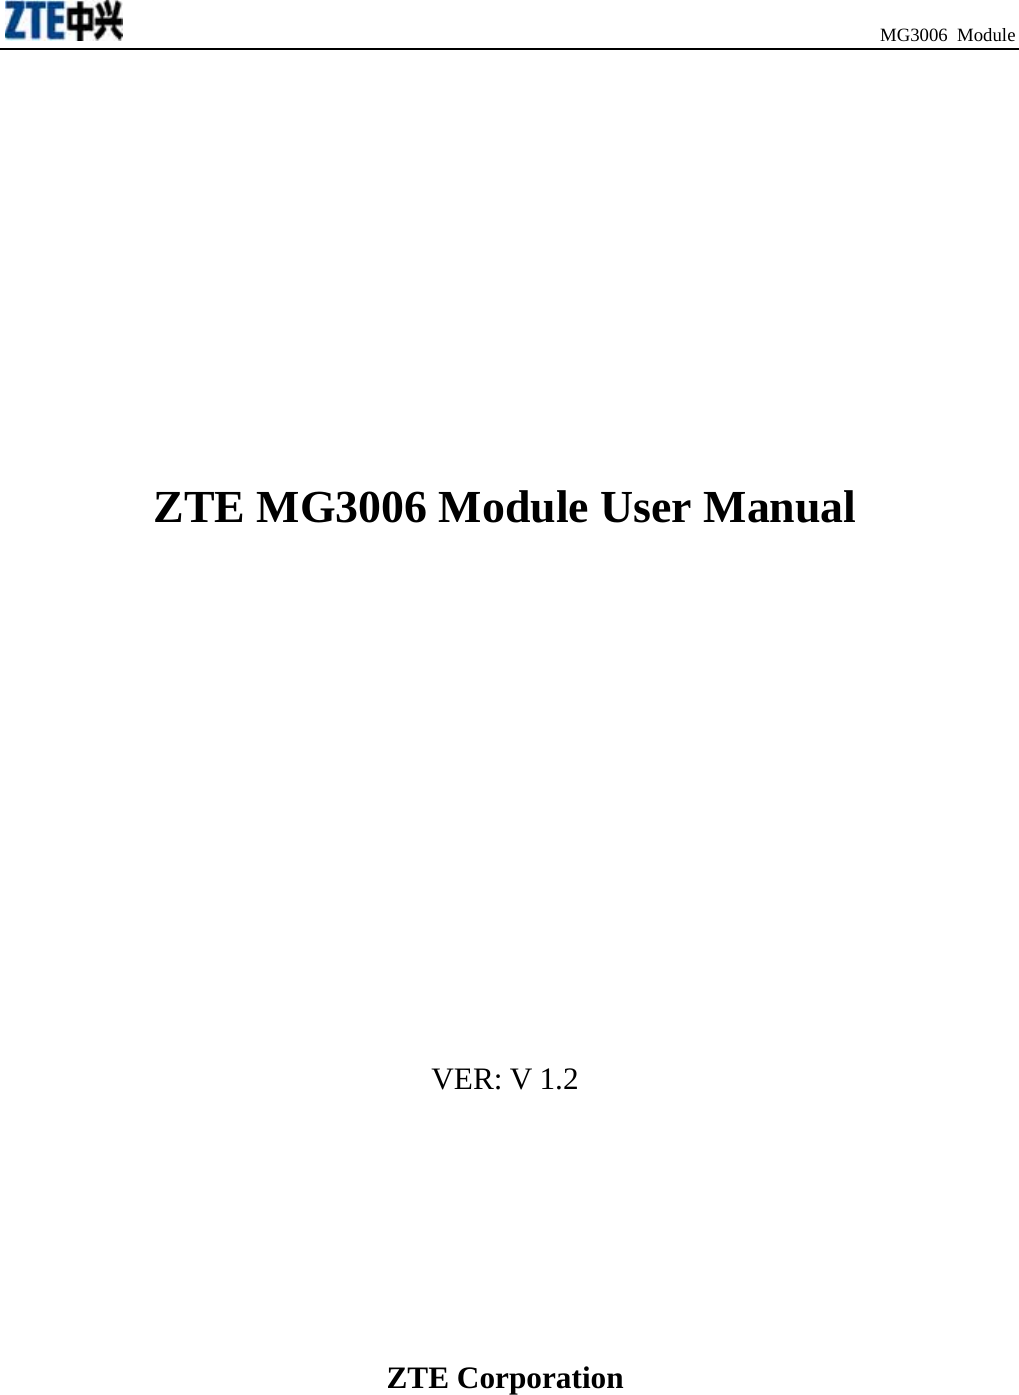                                                                                MG3006 Module       ZTE MG3006 Module User Manual               VER: V 1.2      ZTE Corporation   